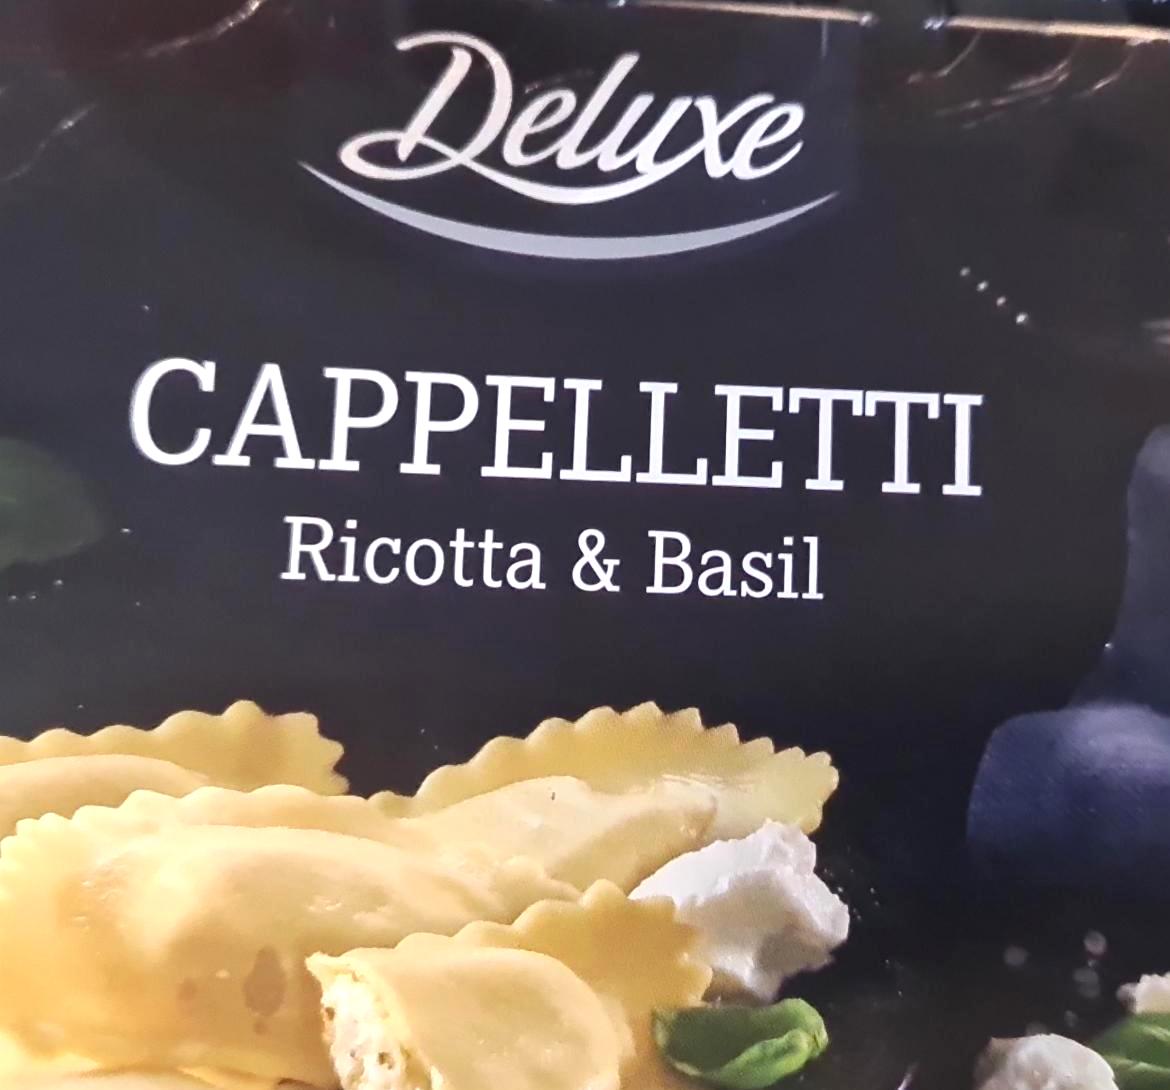 Képek - Cappelletti ricotta & basil Deluxe